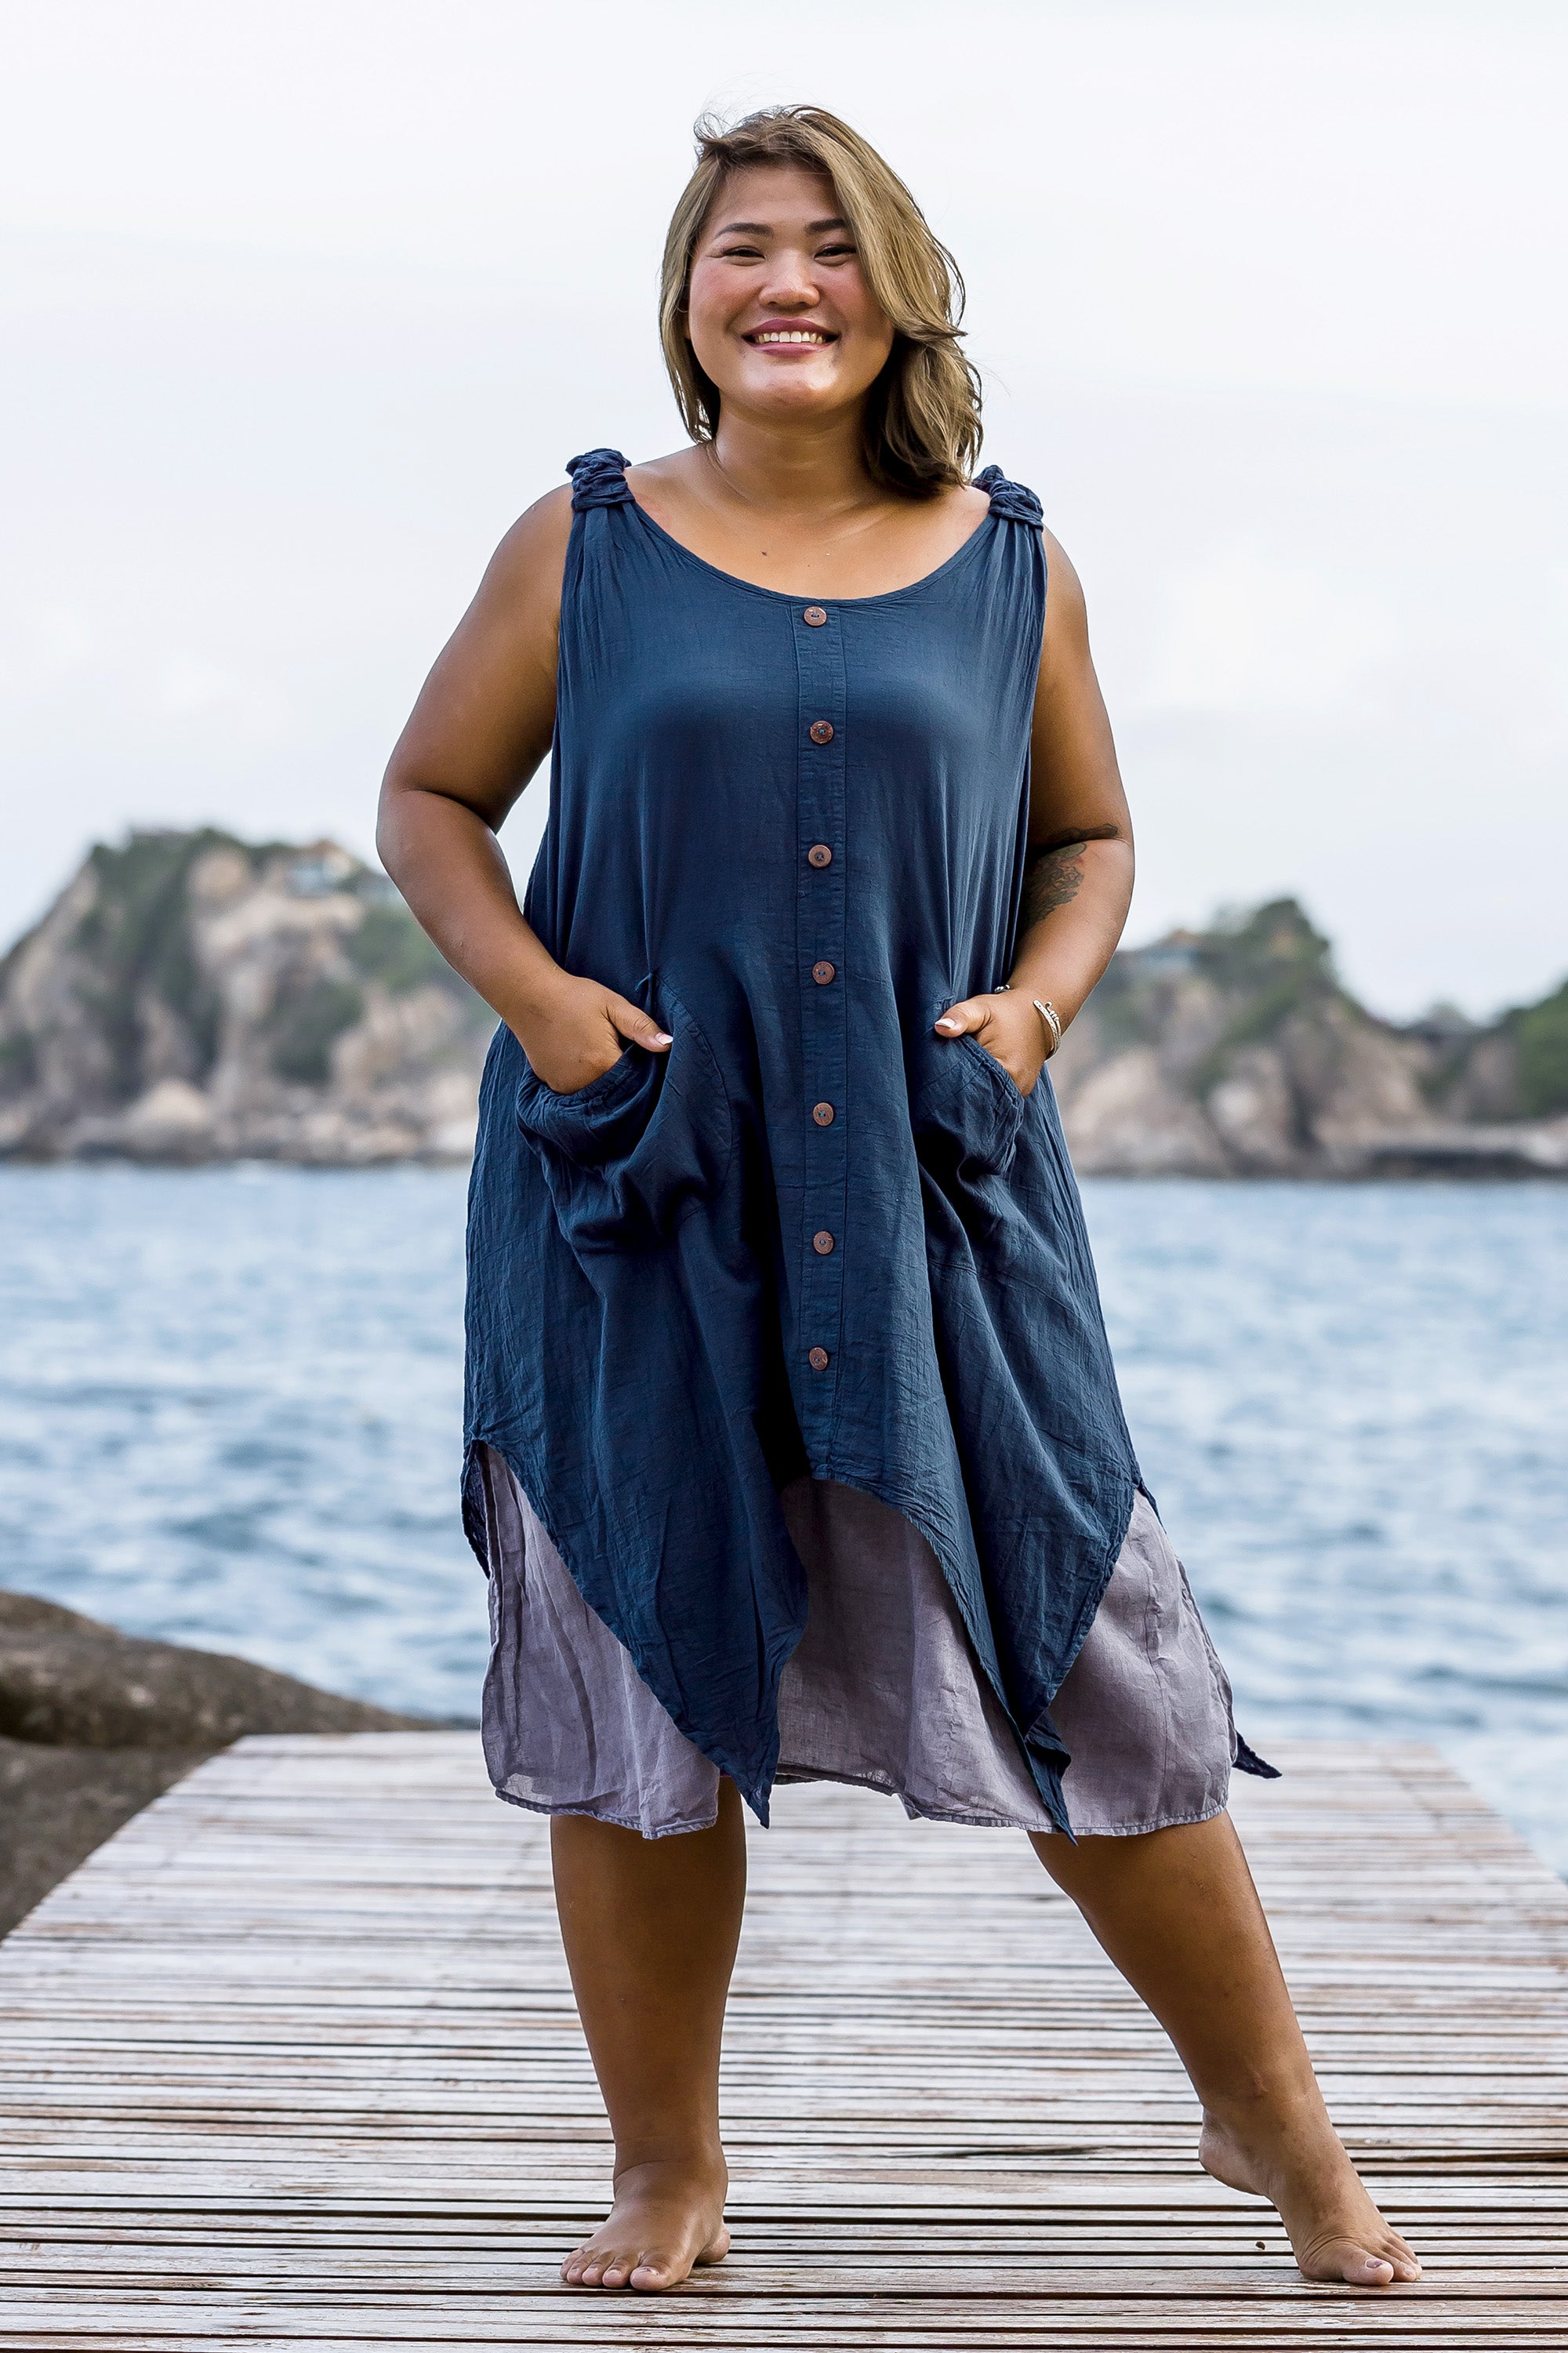 møl restaurant Udvinding Plus Size Women's Crinkled Hill Tribe Cotton Tank Dress in Navy – Harem  Pants